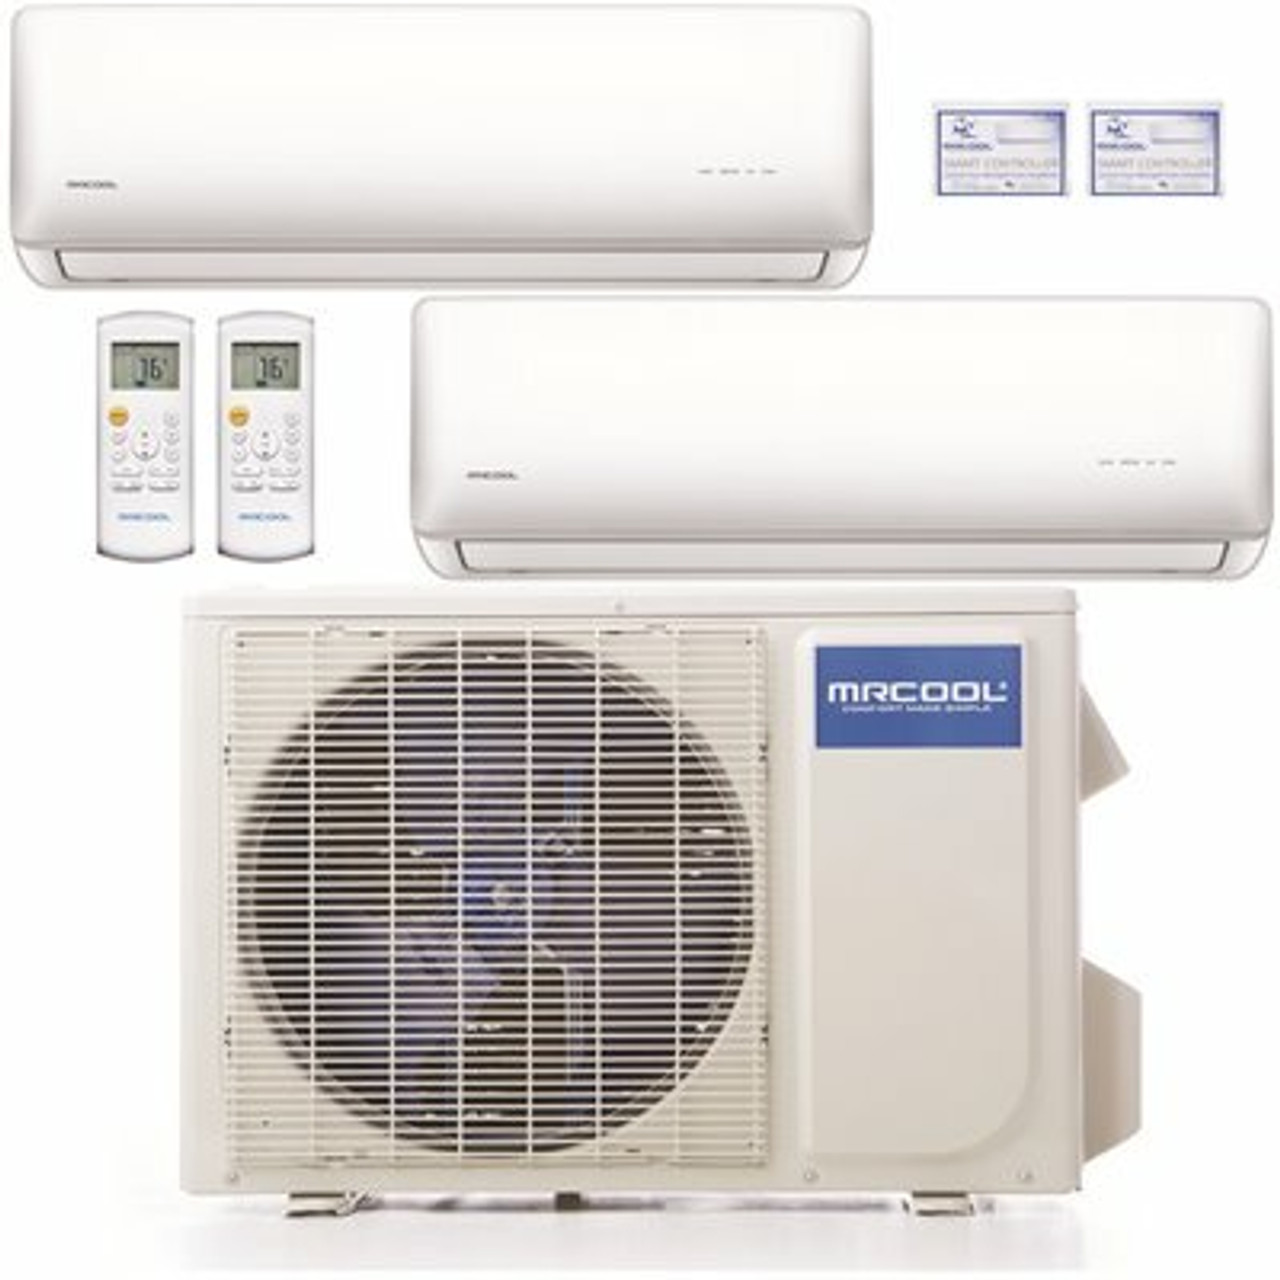 Olympus 27000 Btu 2.25 Ton 2-Zone Ductless Mini-Split Air Conditioner And Heat Pump W/ 25 Ft. Install Kit, 230-Volt/60Hz